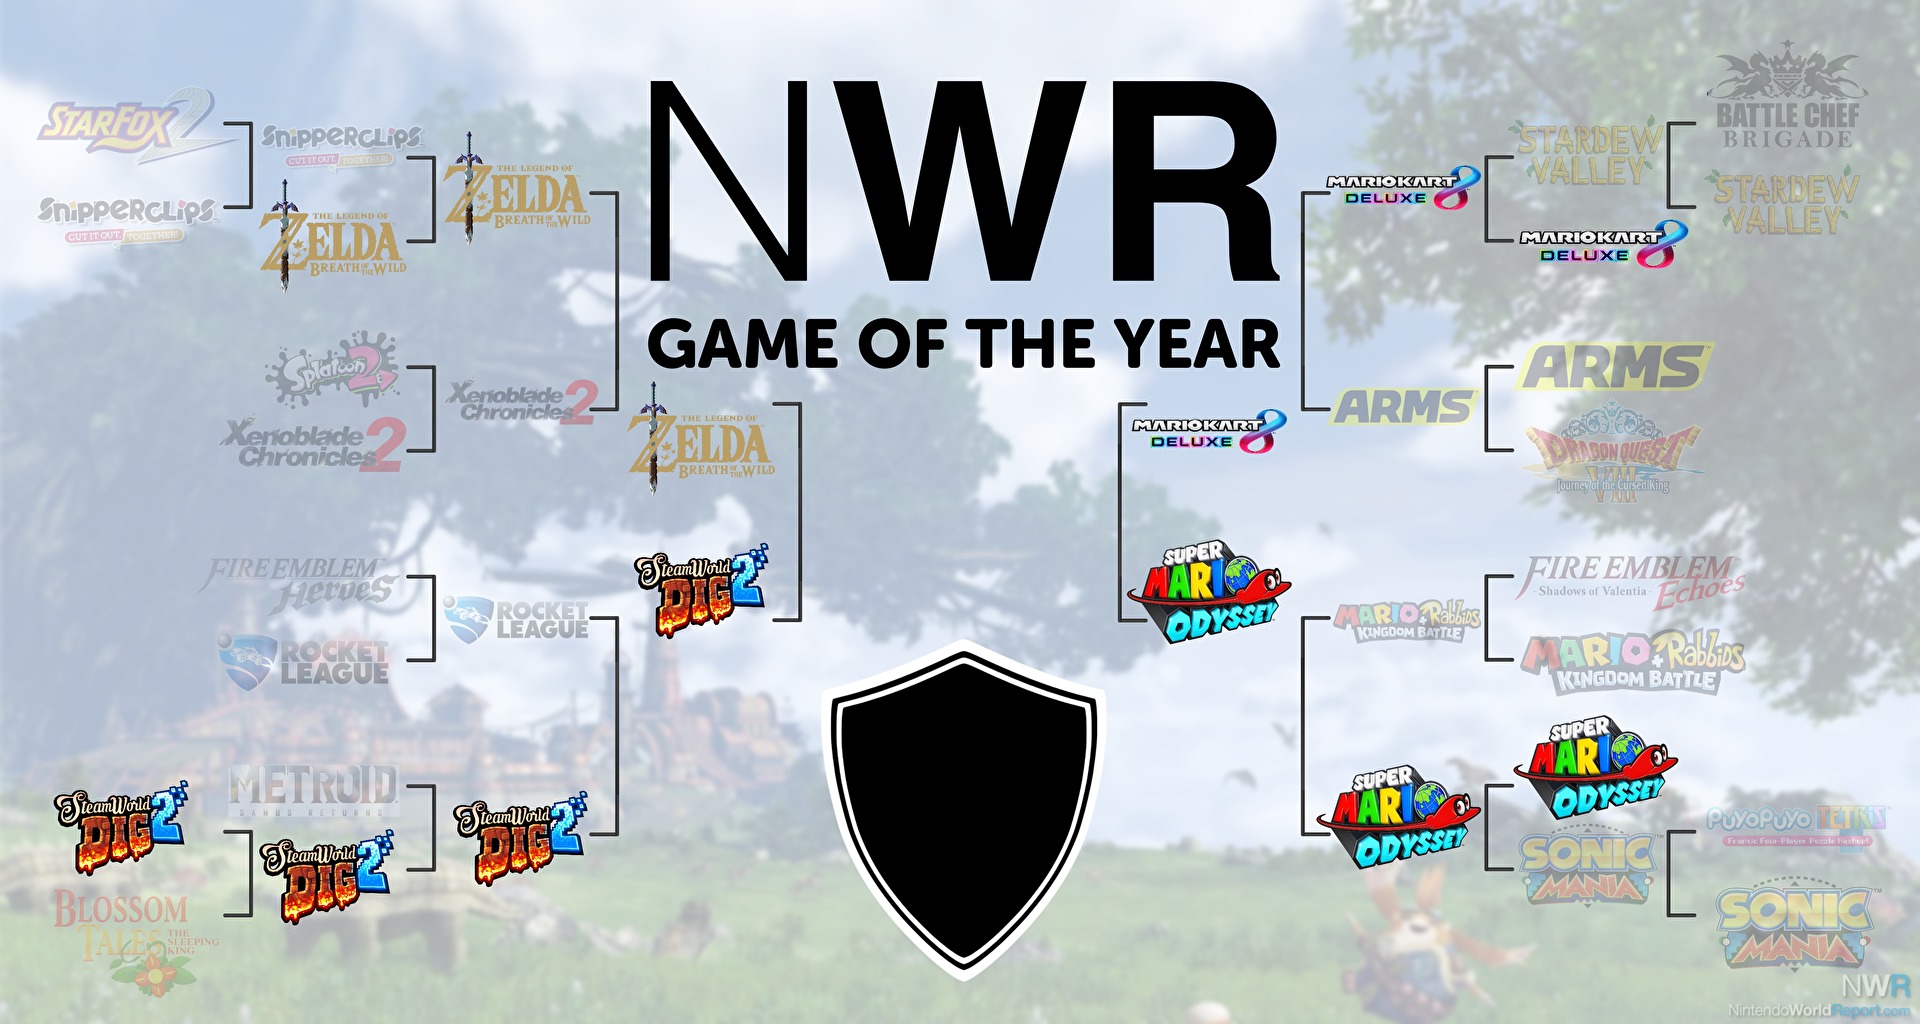 Nintendo World Report Tournament of GOTY 2017 - Feature - Nintendo